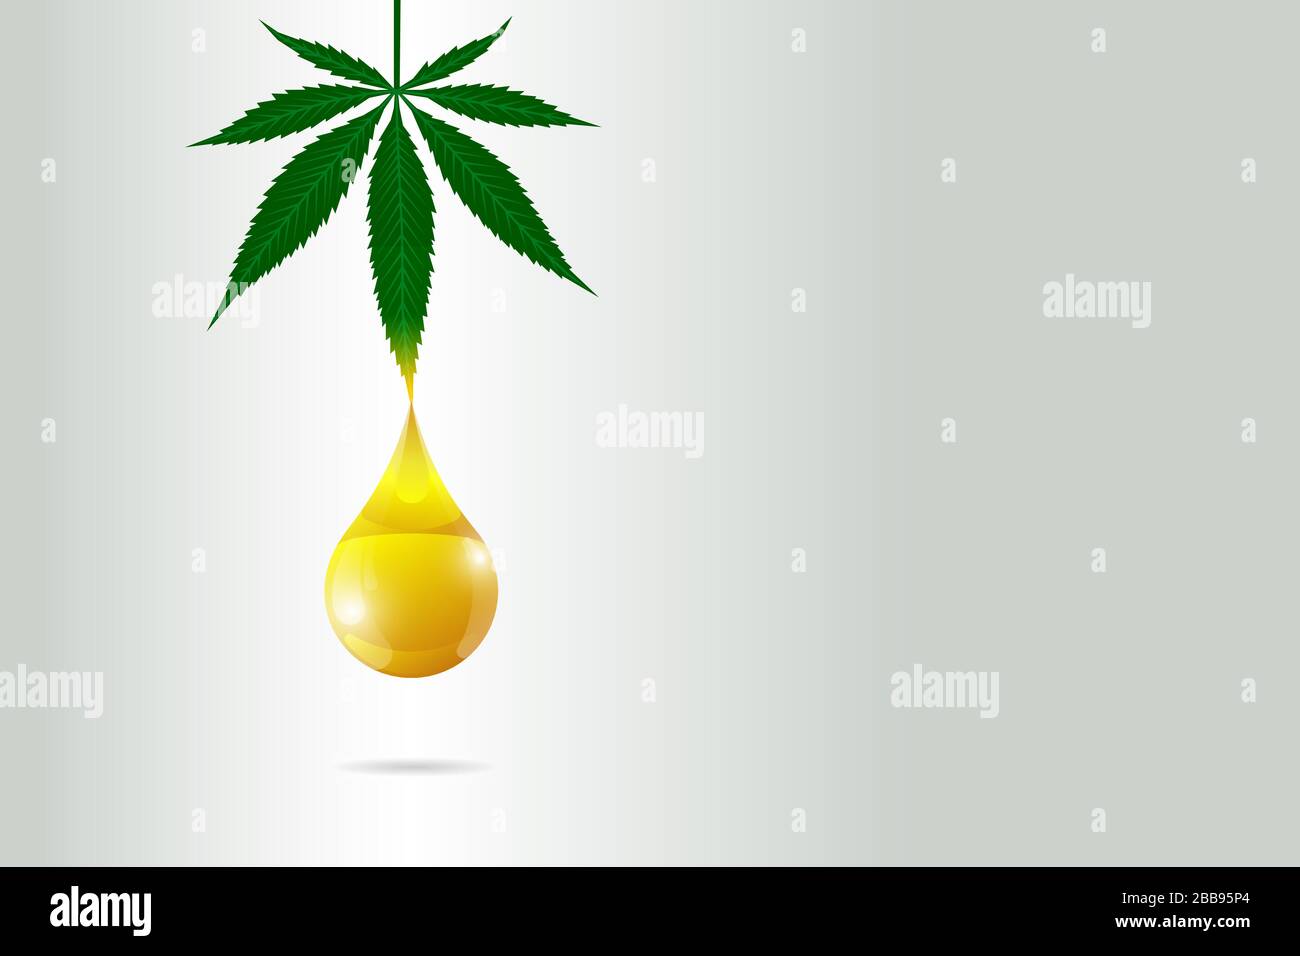 CBD hemp oil of medical cannabis poster concept. Marijuana leaf extract drop natural product label design template. Vector eps illustration Stock Vector